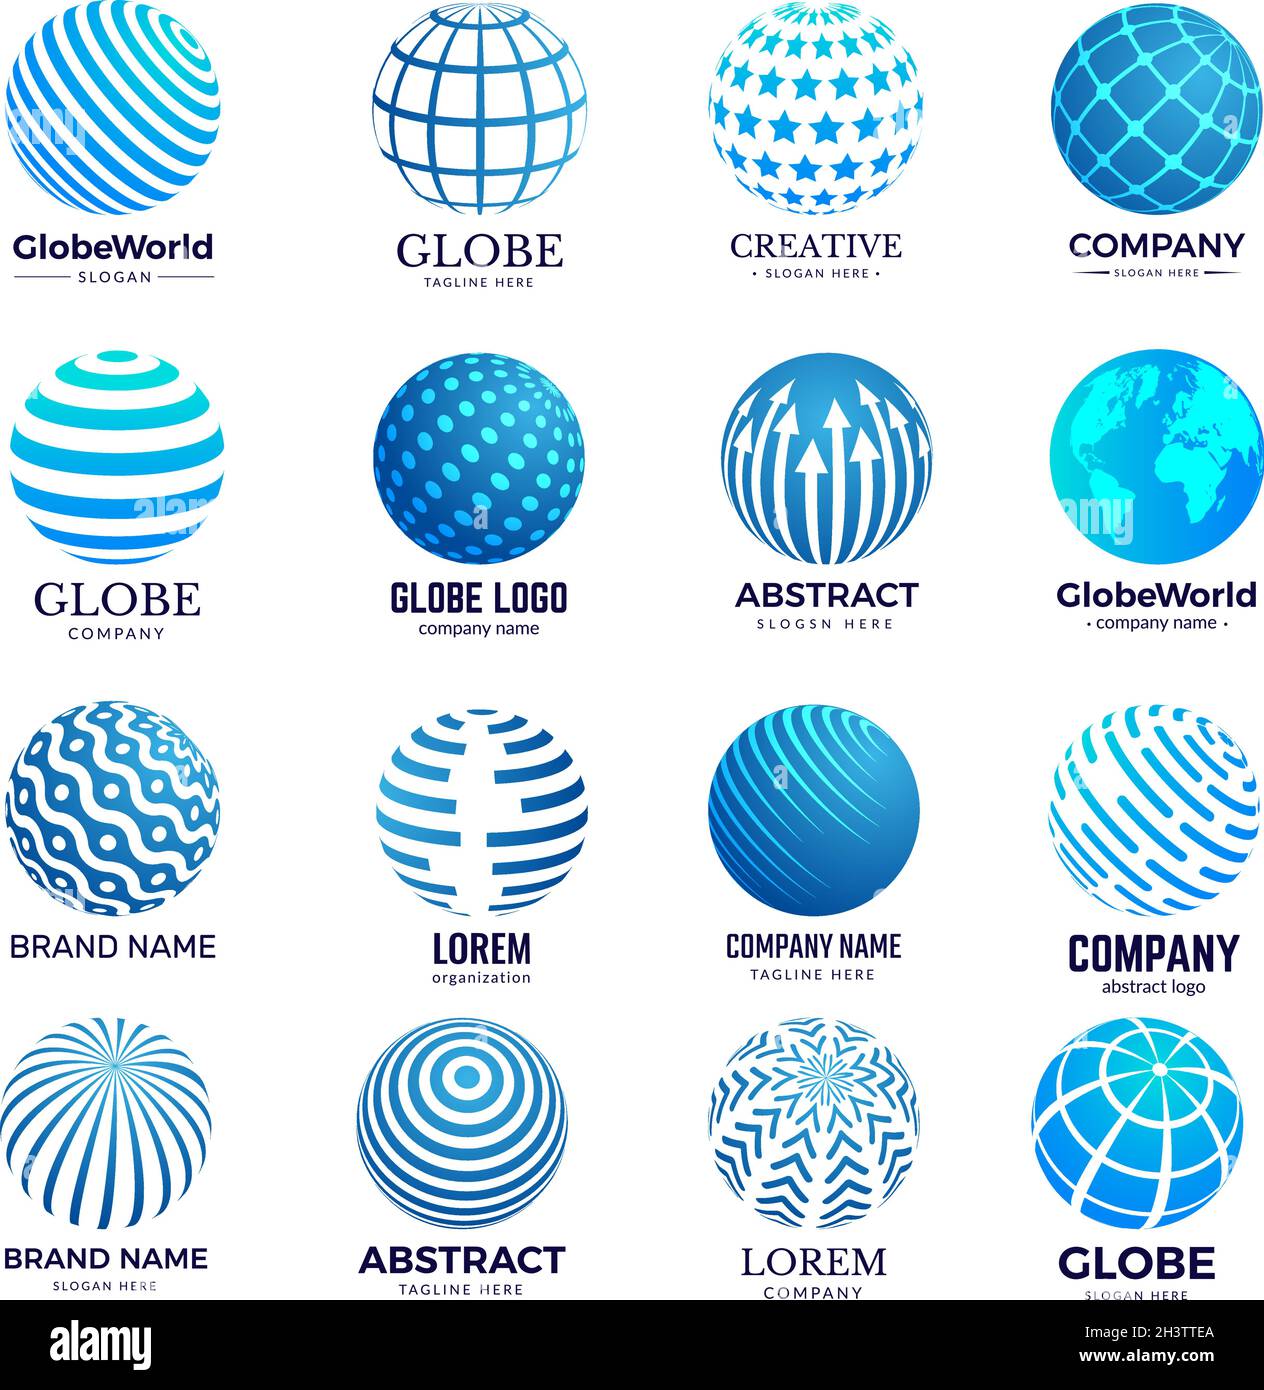 Globe symbols. Circle forms world round shapes identity stylized icon for logo design Stock Vector